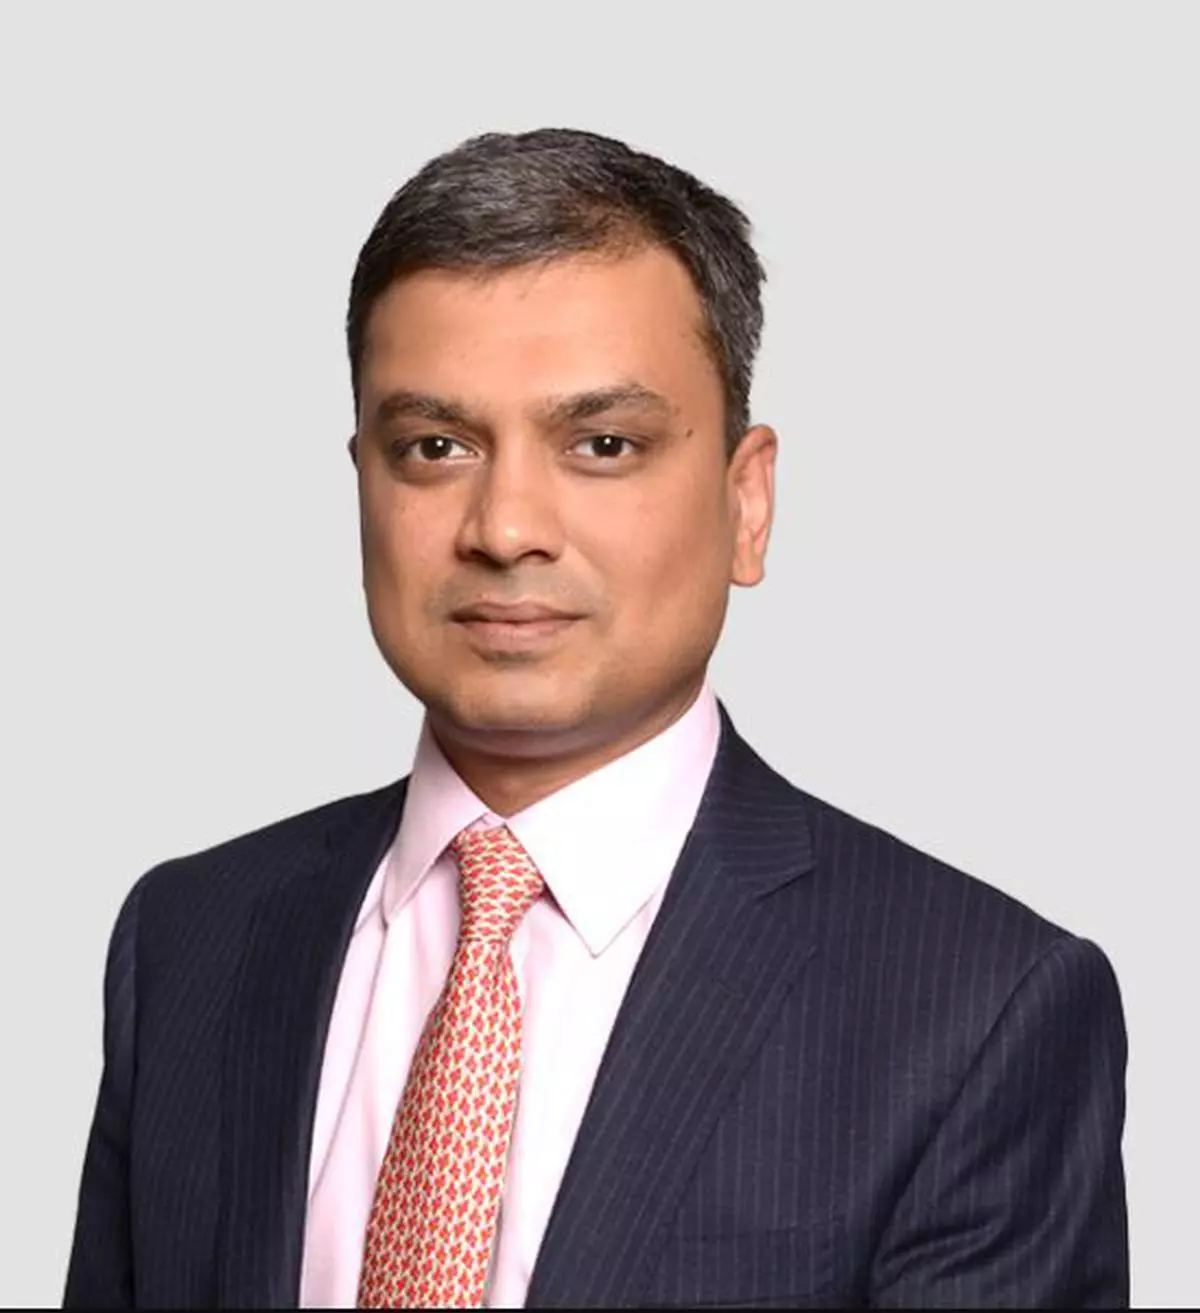 File Photo: Sunil Mittal, CEO, Movate